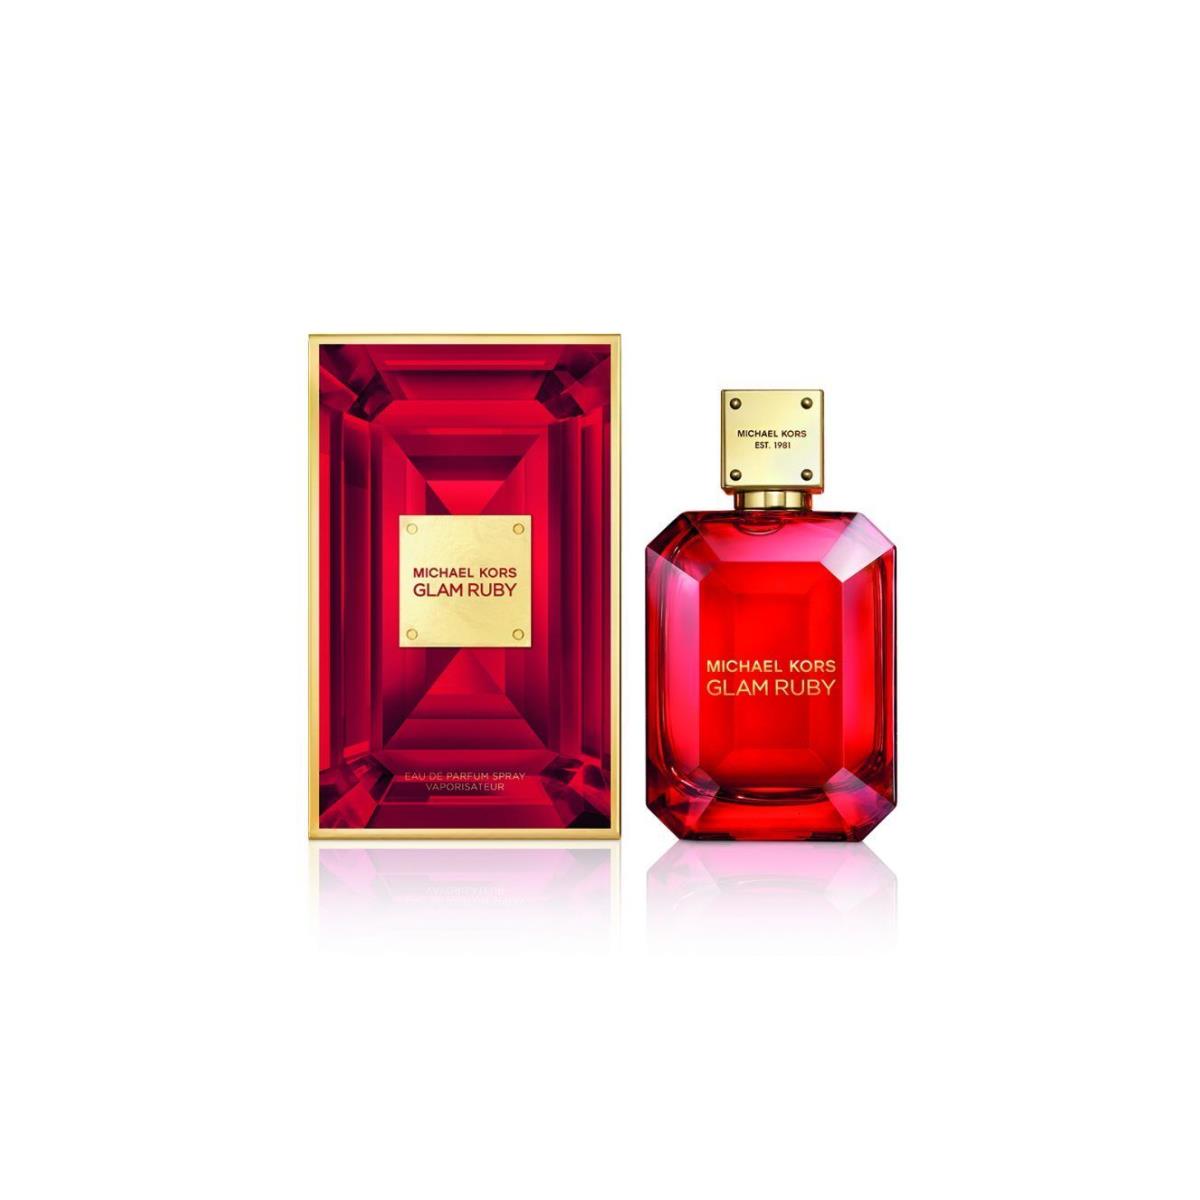 Michael Kors Glam Ruby Perfume Eau de Parfum 1.7 oz / 50 ML Spray Women